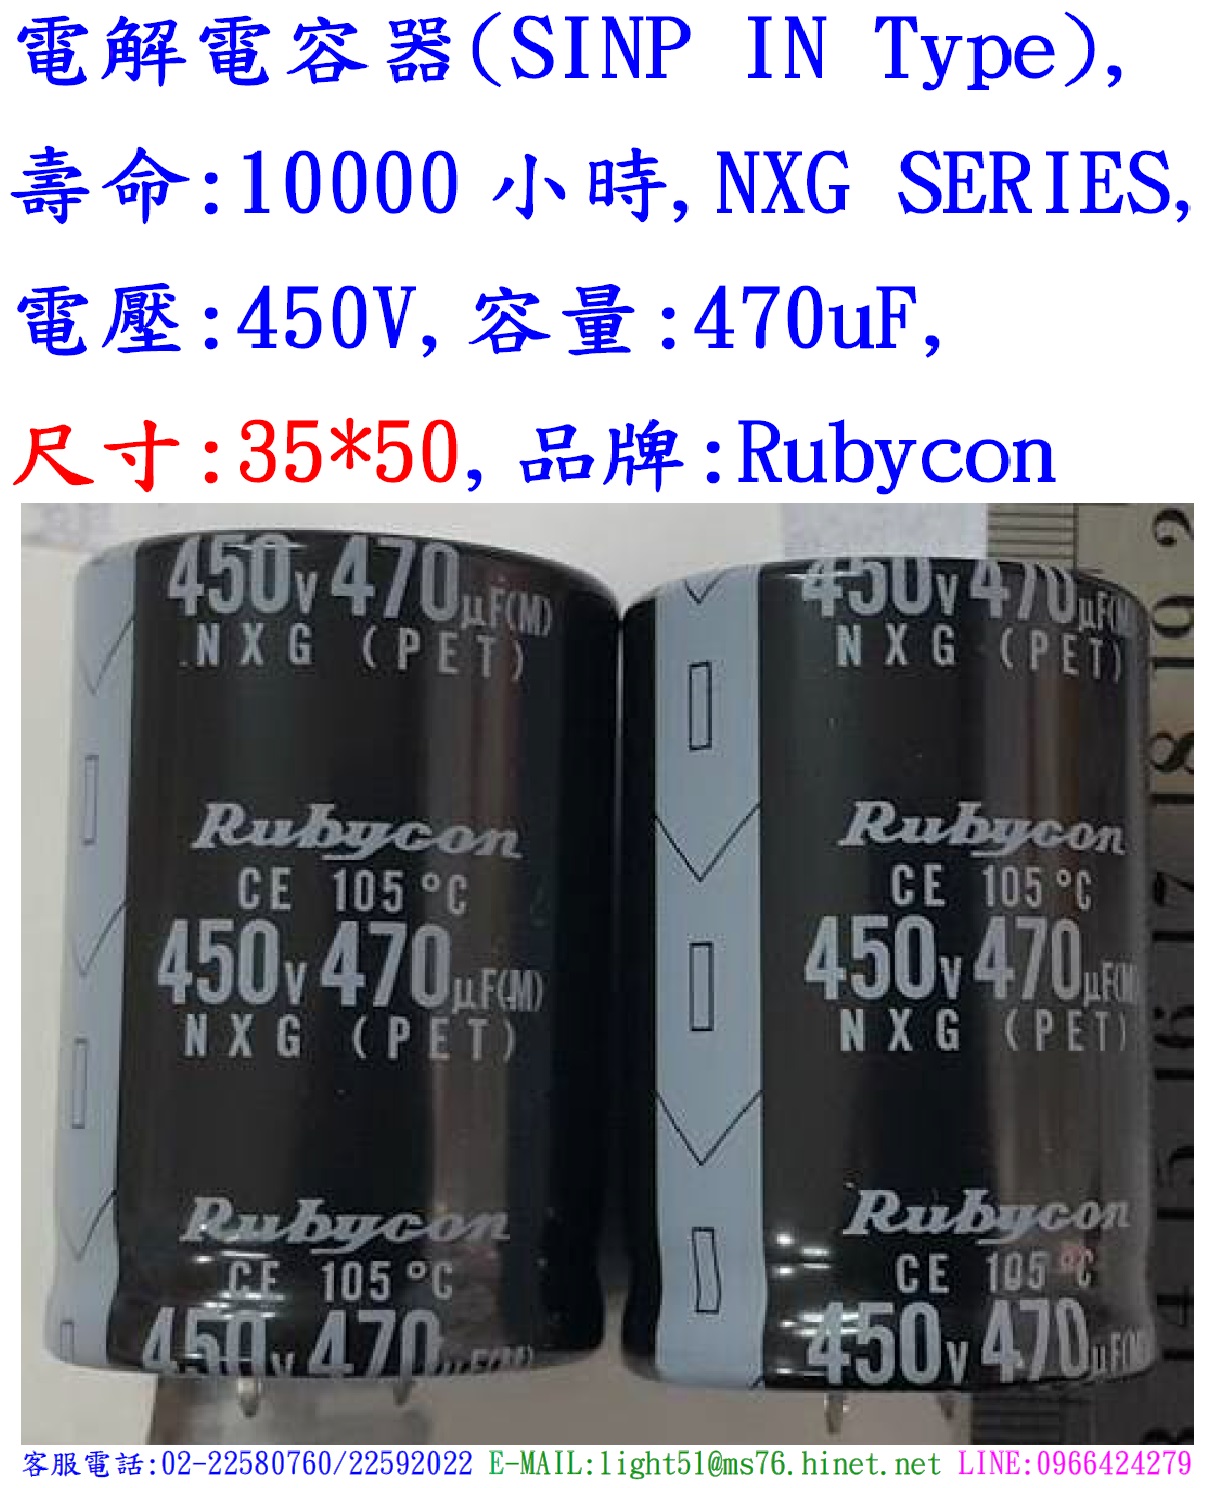 NXG,450V,470uF,尺寸:35*50,電解電容器,壽命:10000小時,Rubycon